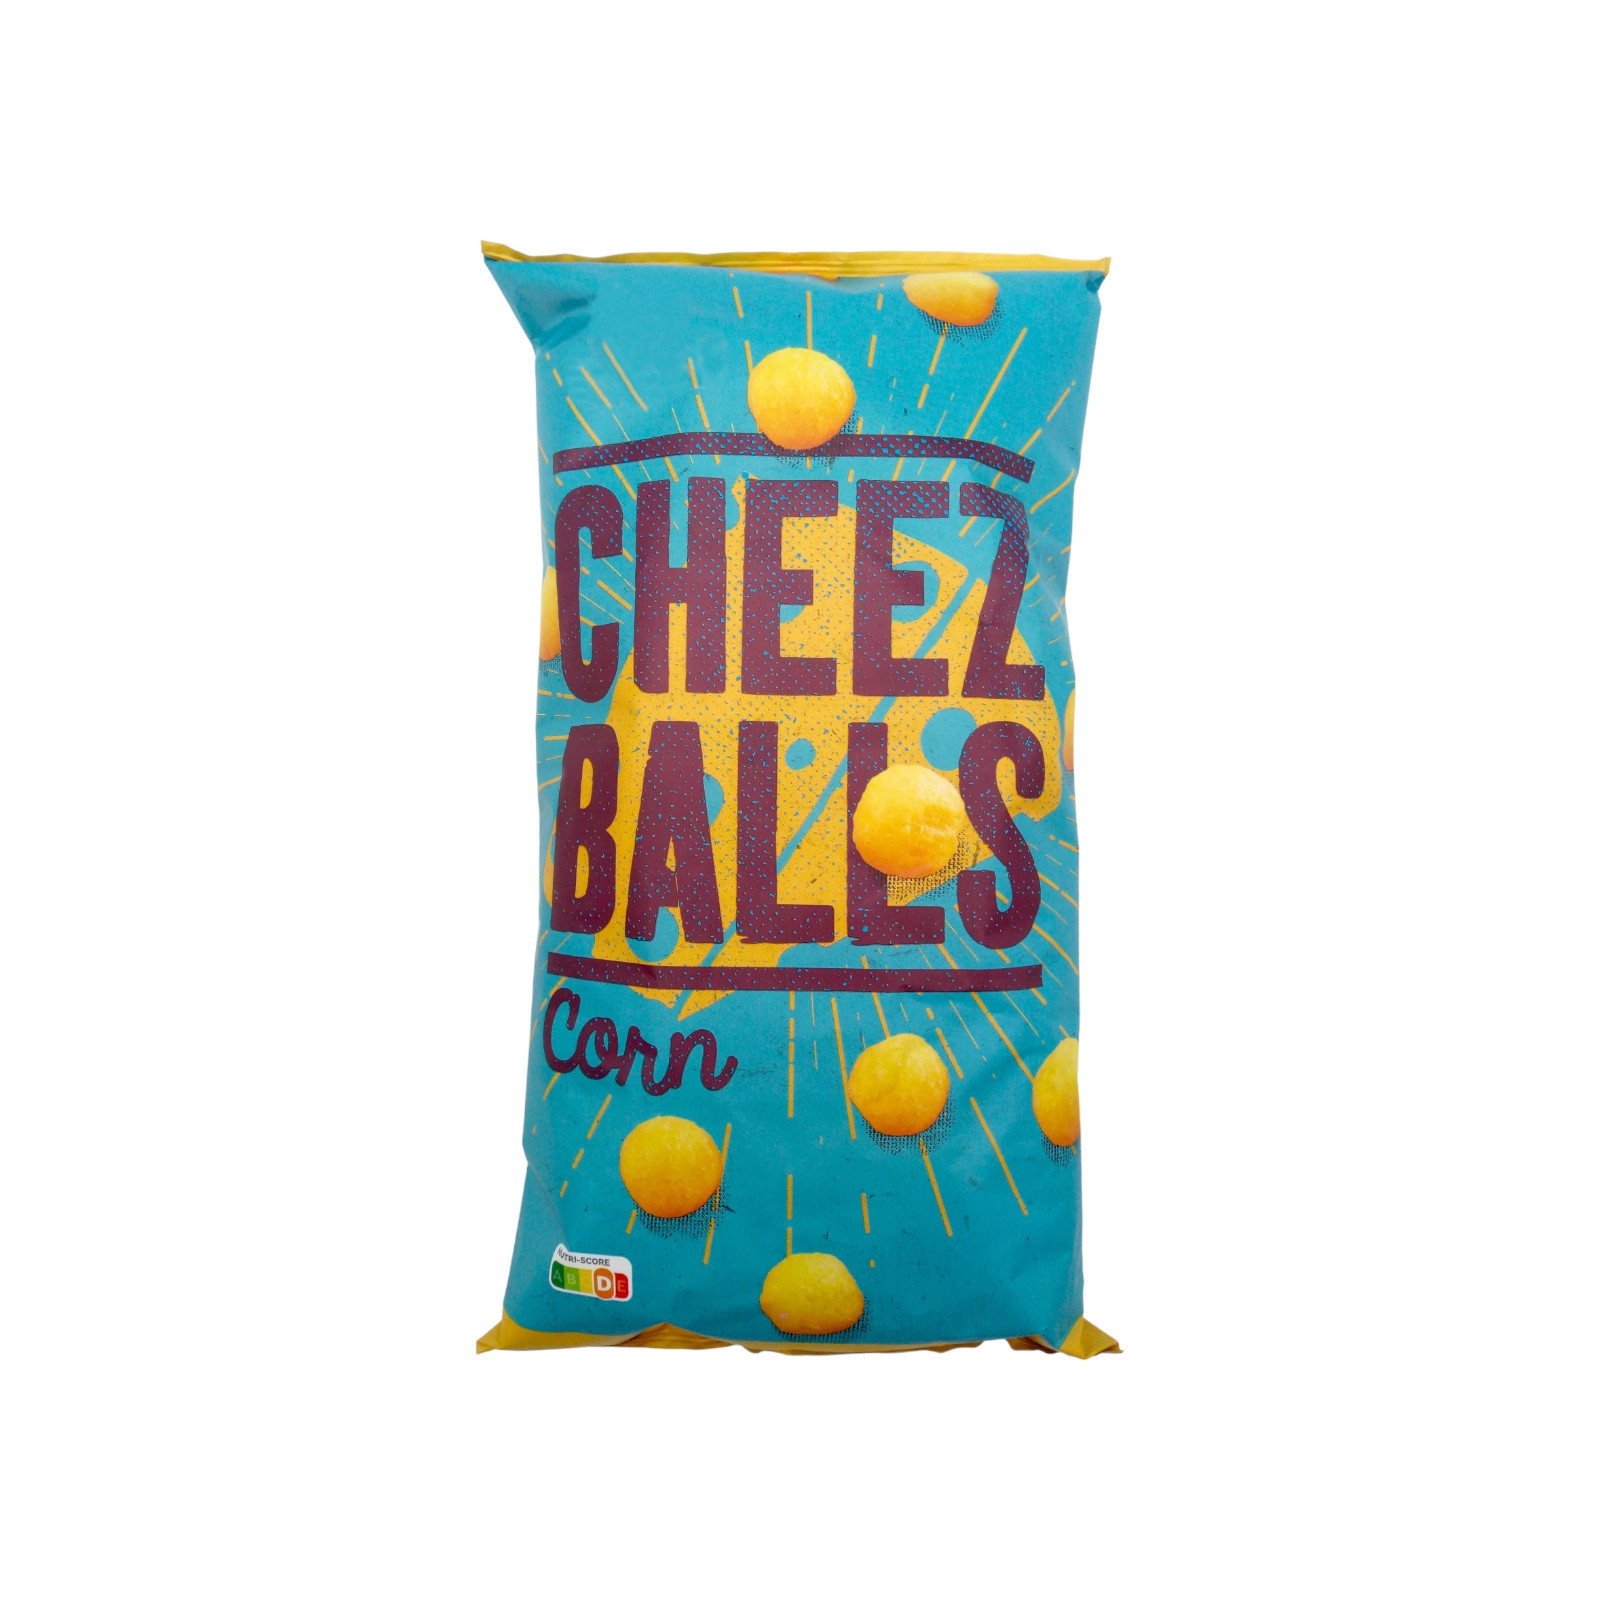 Cheez Balls Corn 175g